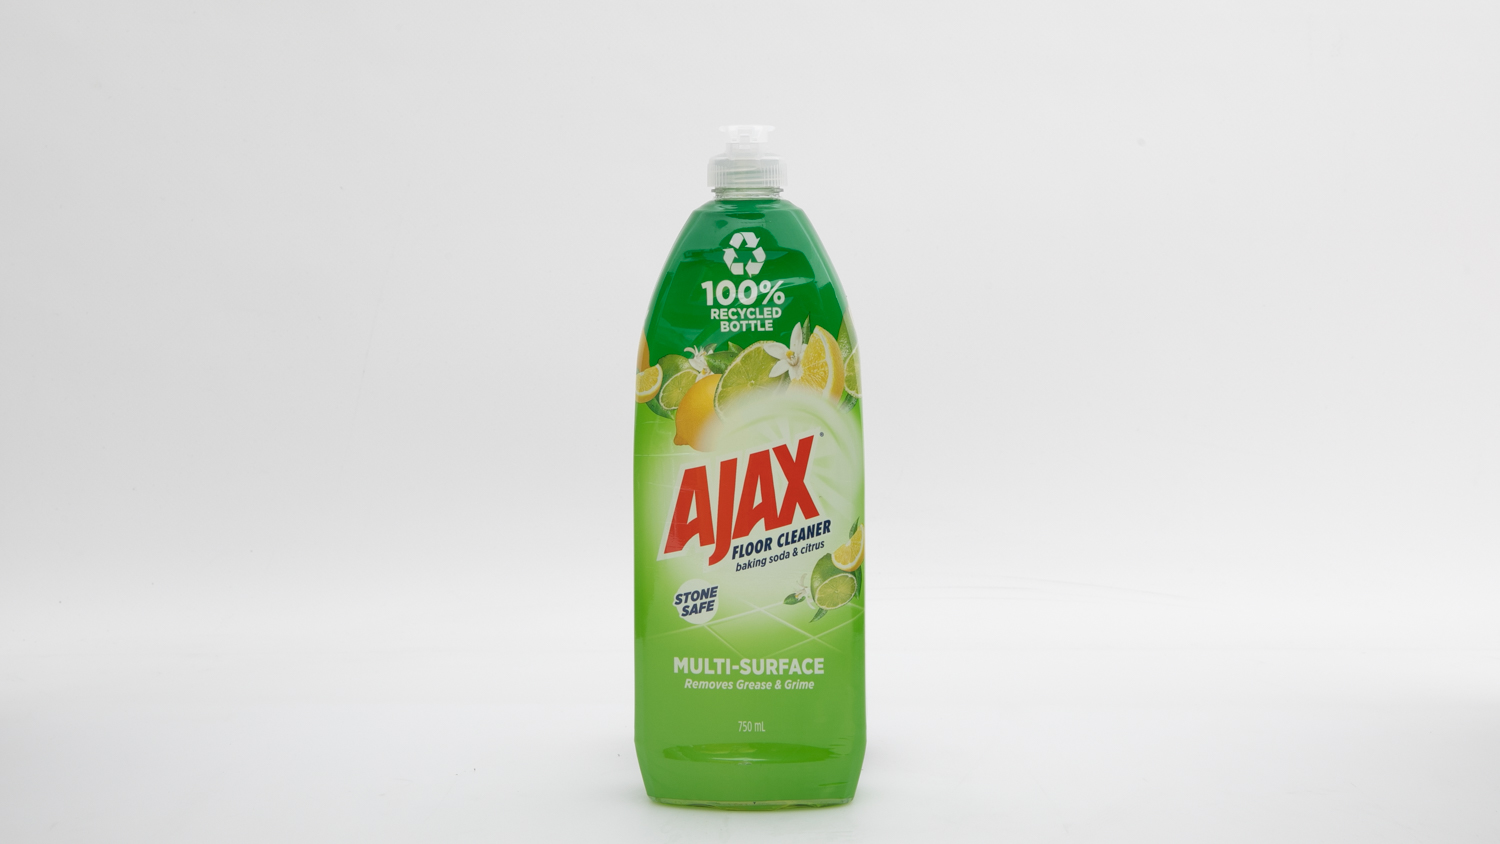 Ajax Floor Cleaner Baking Soda and Citrus Multi-Surface carousel image